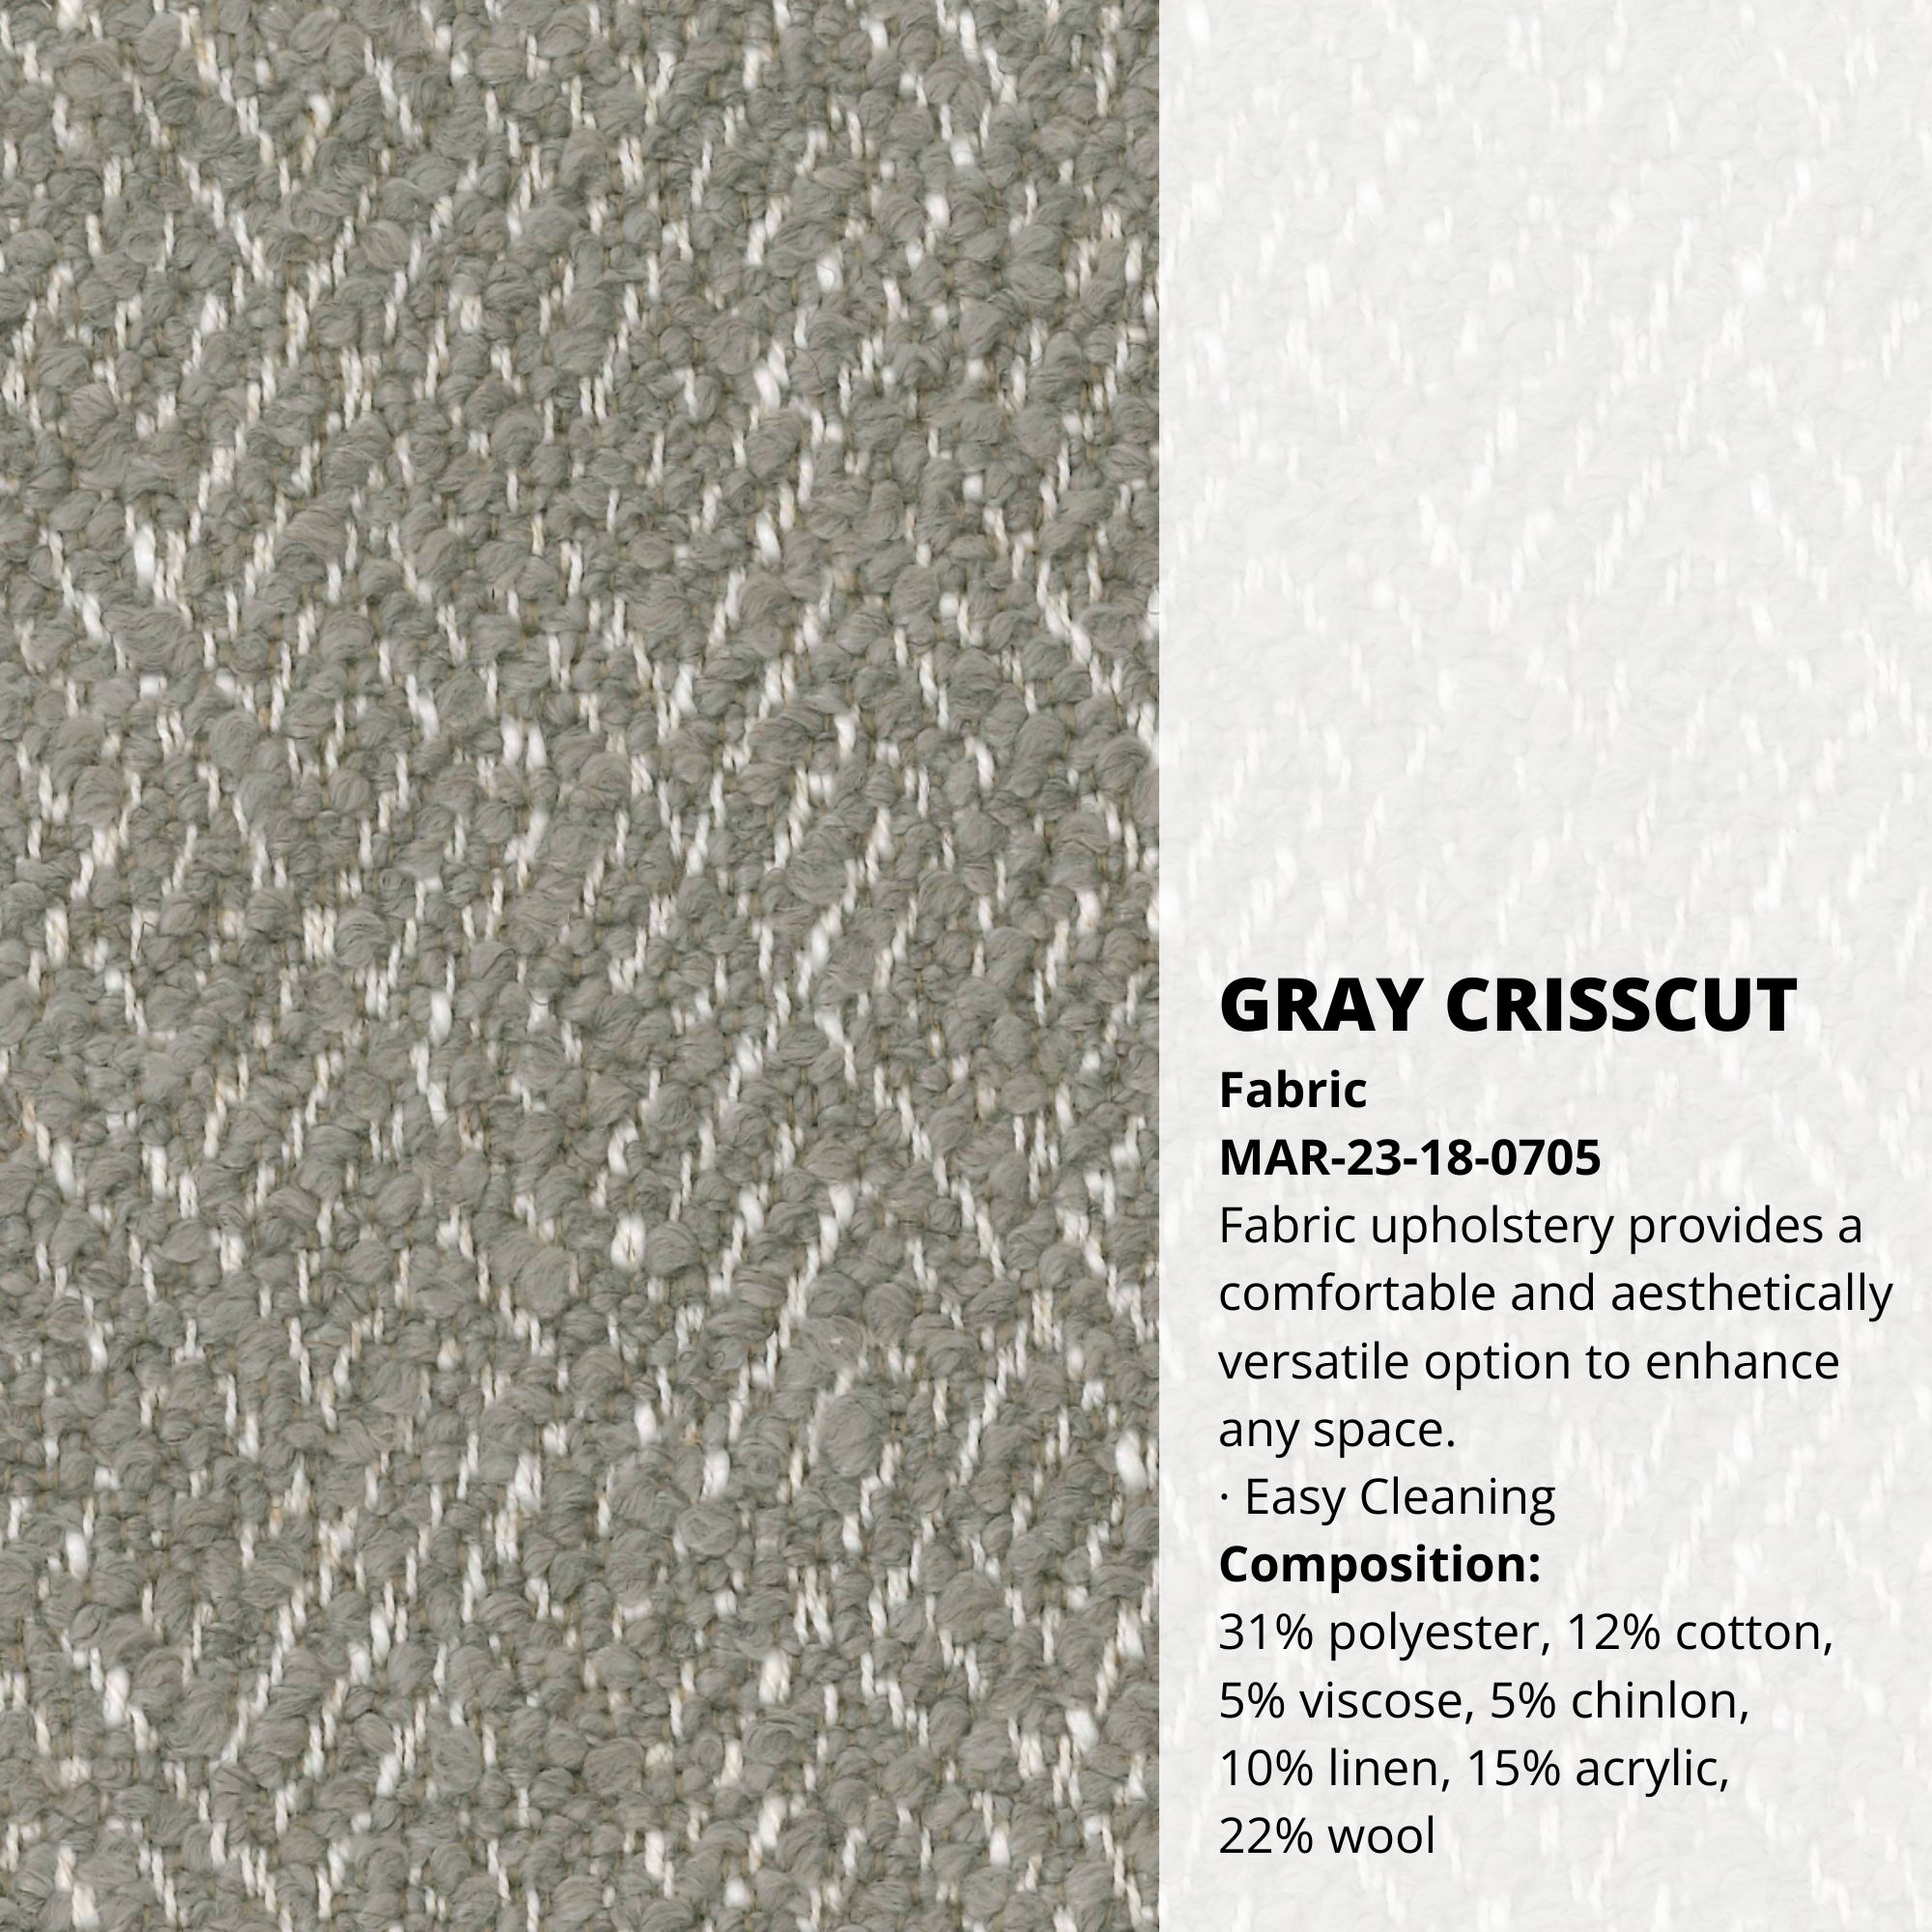 Gray Crisscut